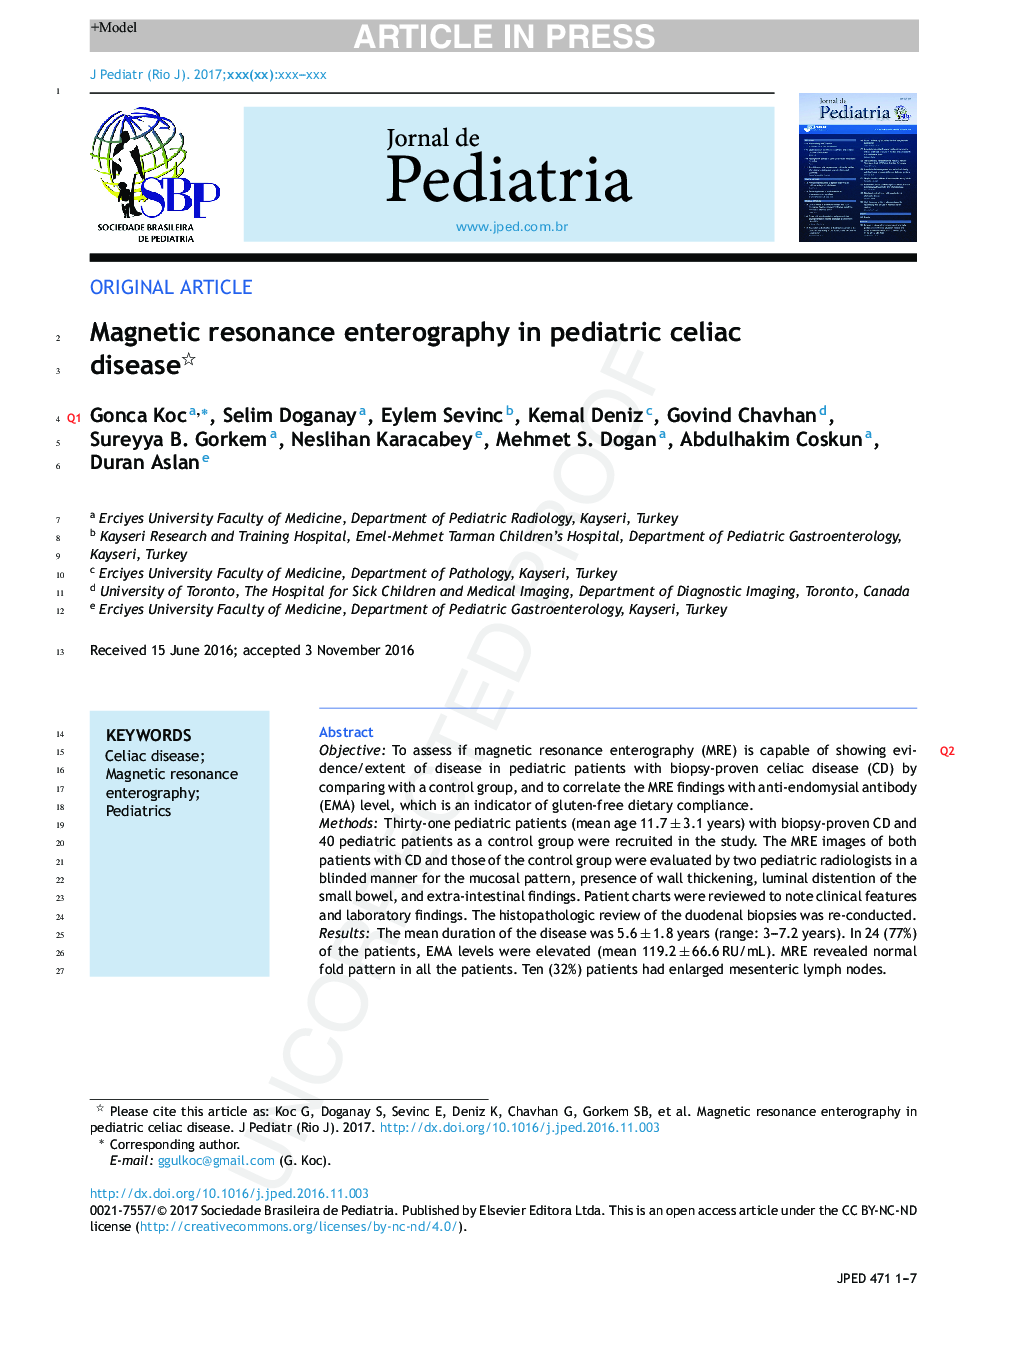 Magnetic resonance enterography in pediatric celiac disease